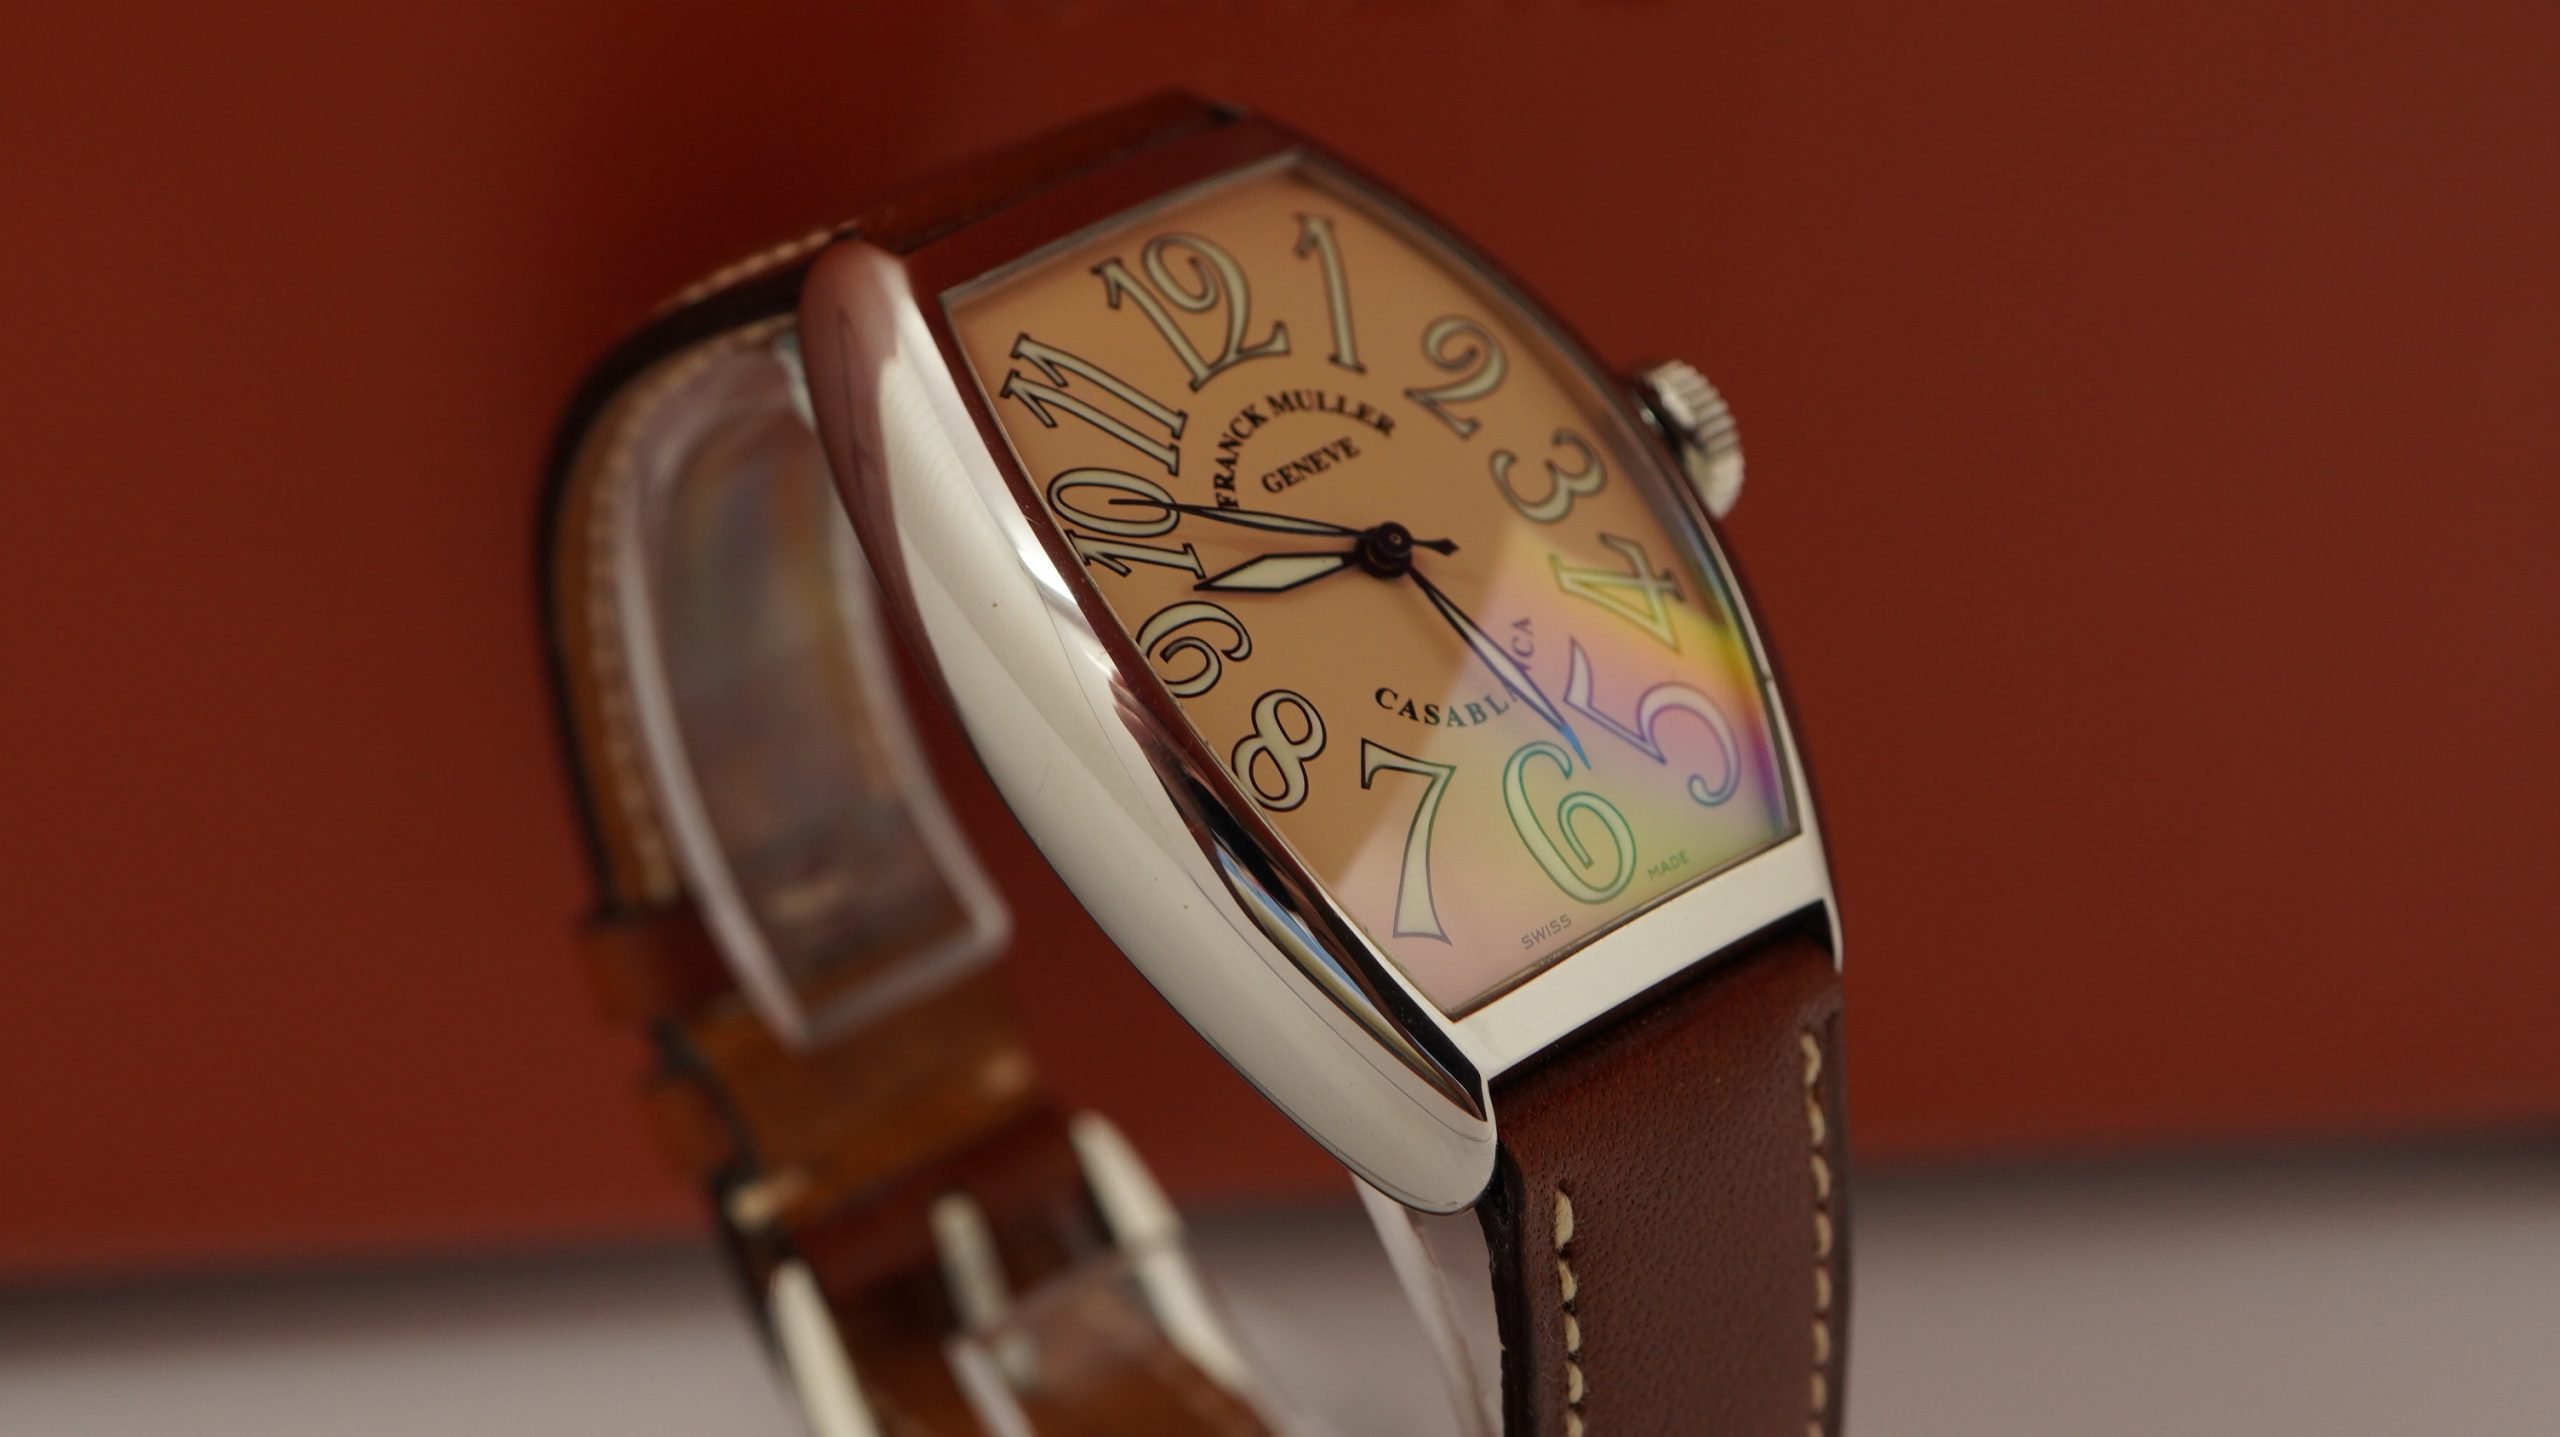 Franck Muller Casablanca 5850 - Edinburgh Watch Company